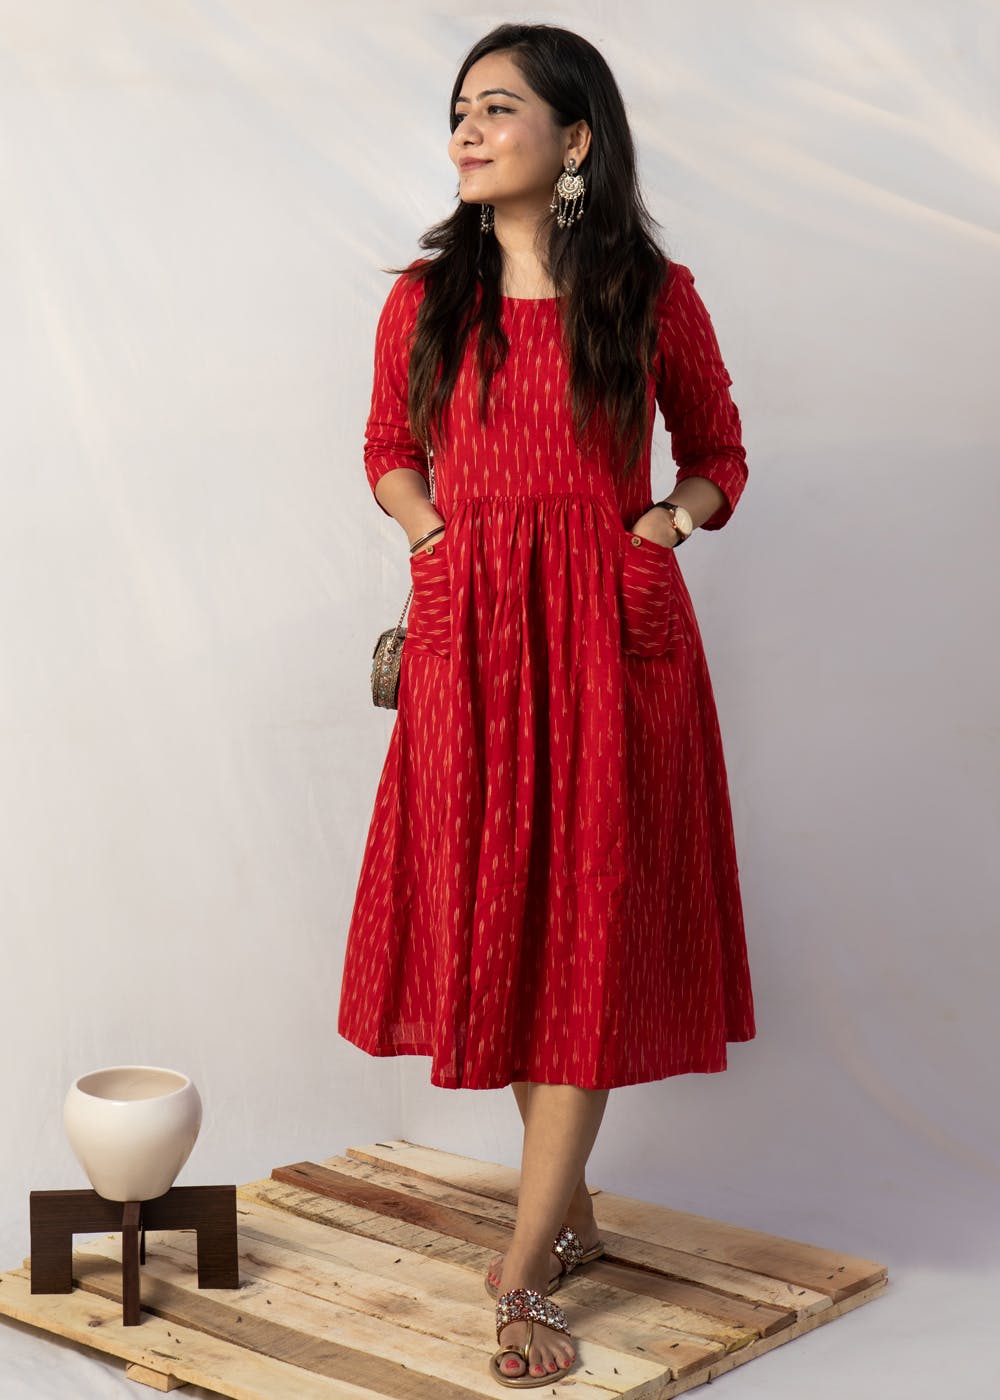 Designer Womenswear Dress In Berry red Colour  sasyafashion